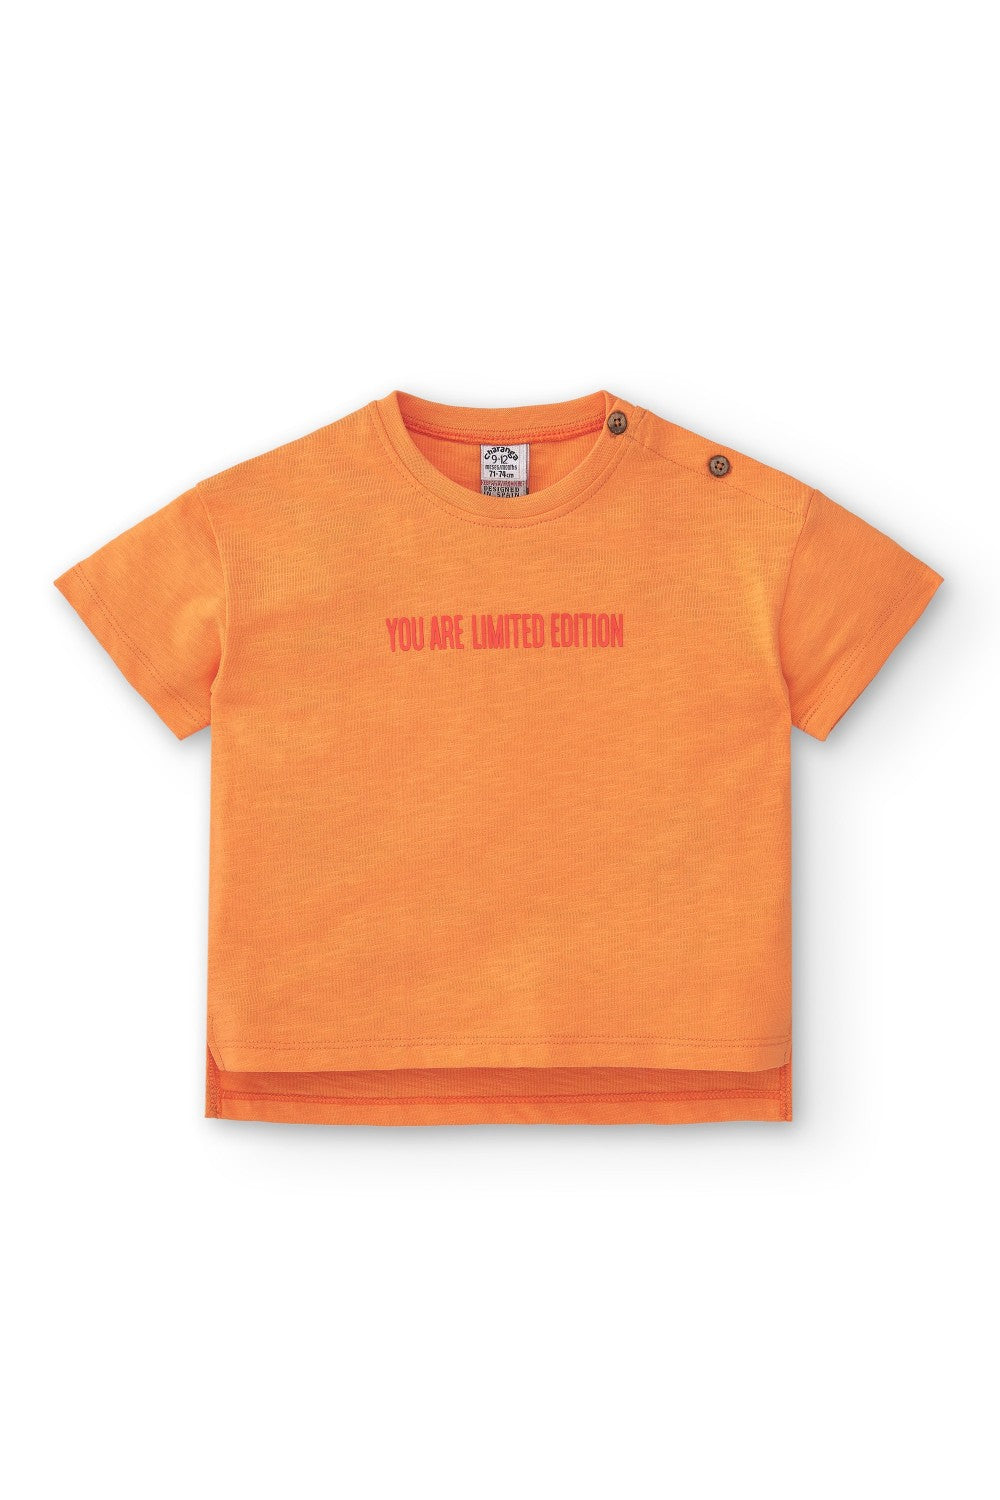 Camiseta de bebé naranja VERANO/Charanga